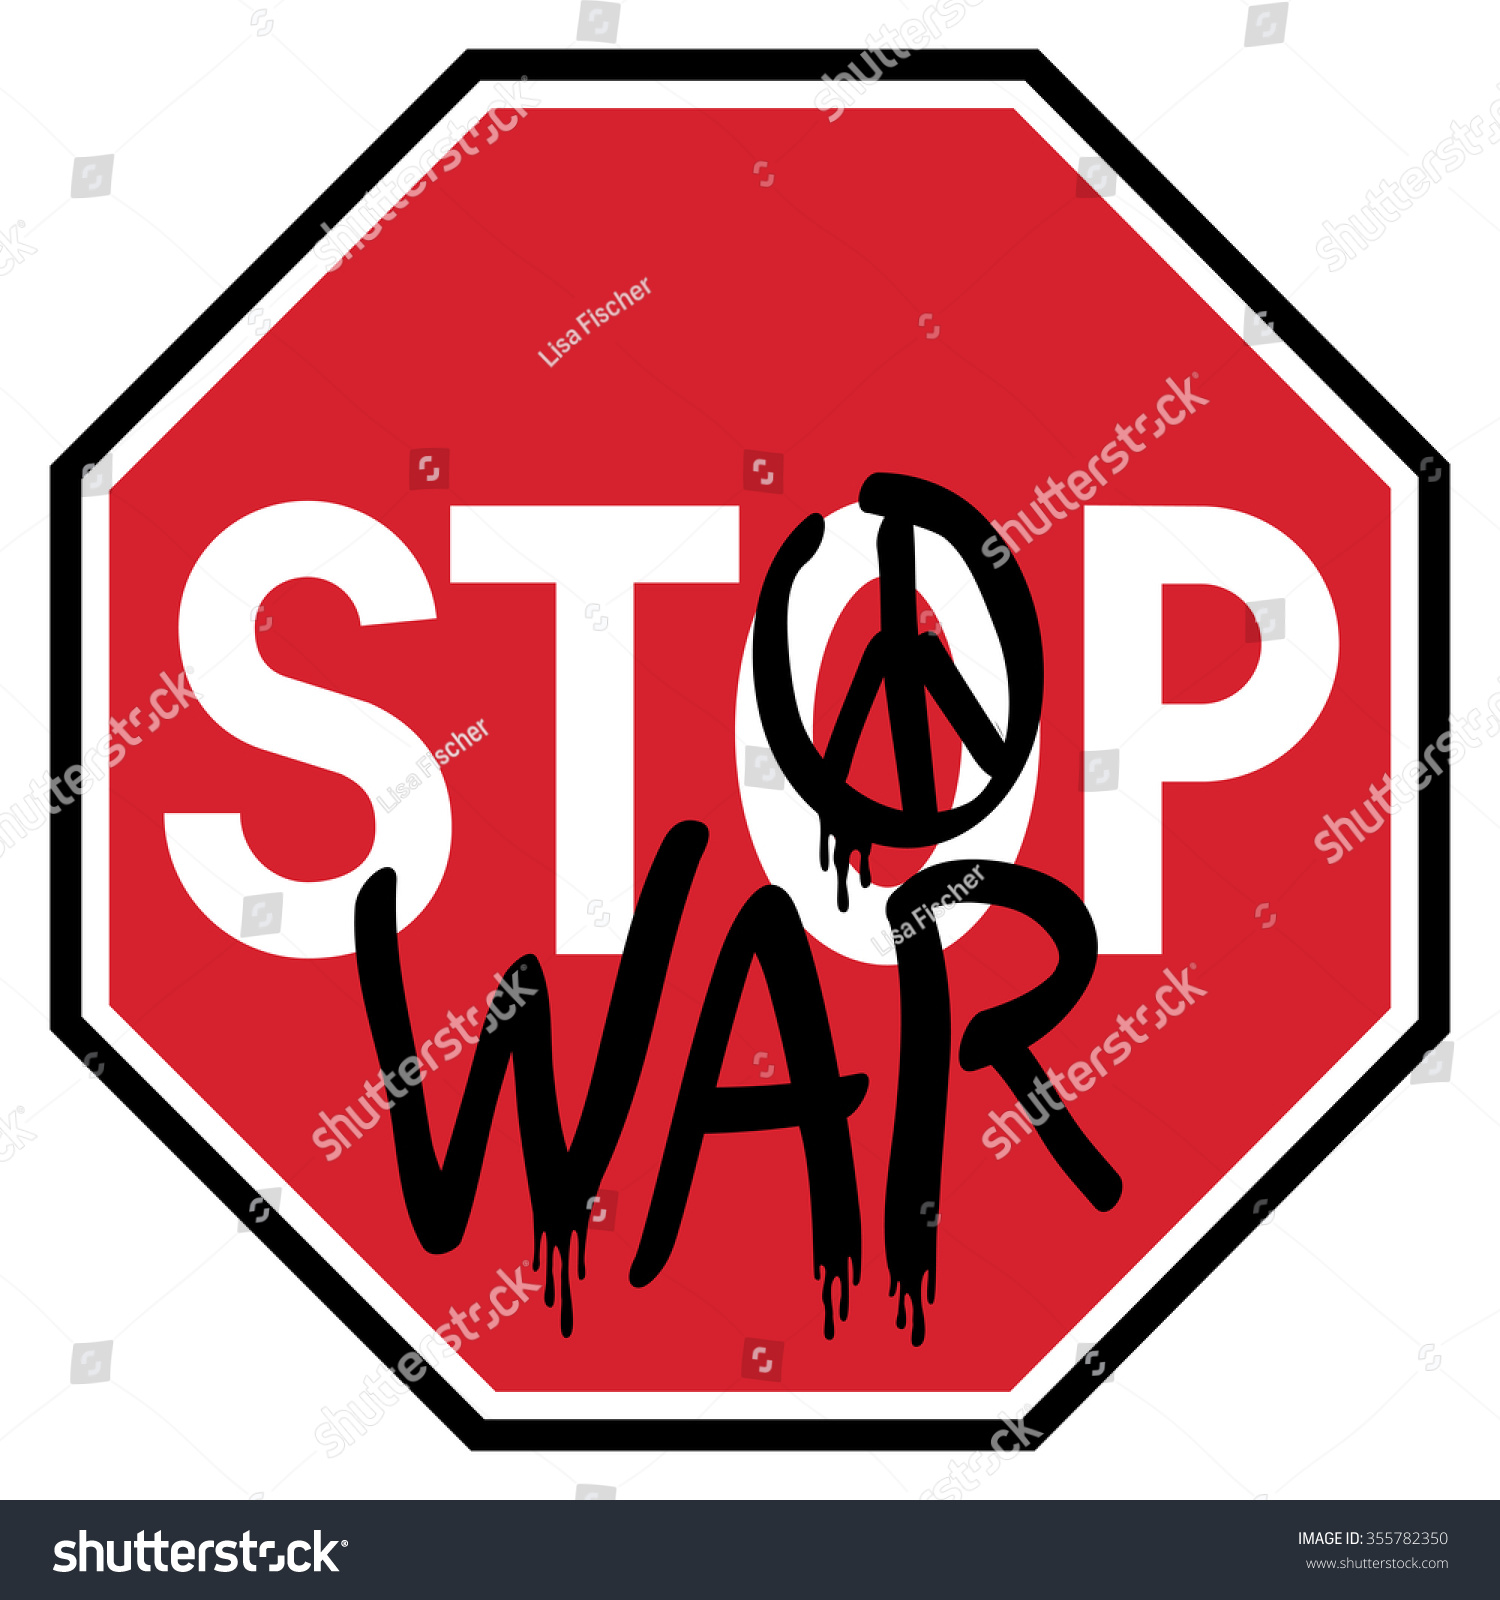 Stop Traffic Sign Antiwar Graffiti Stock Photo (Photo, Vector ...